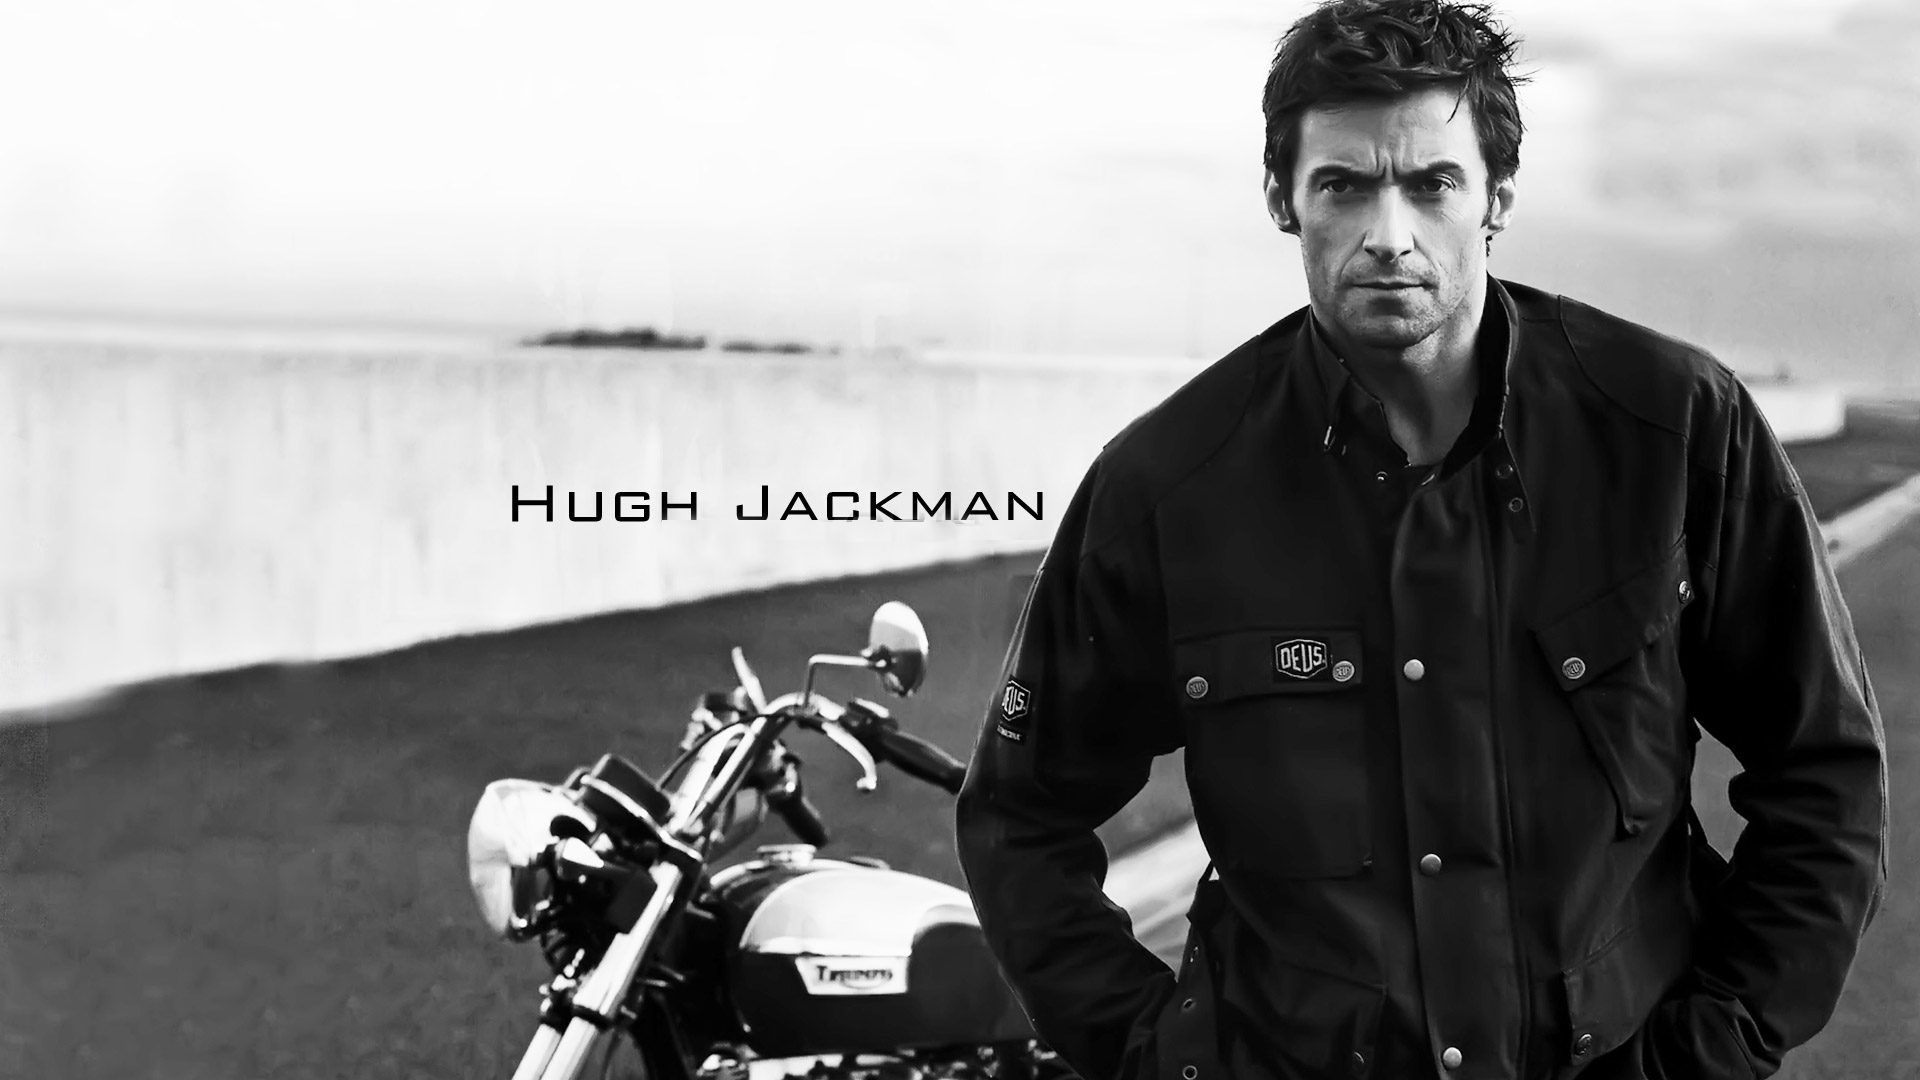 Hugh Jackman Wallpaper High Resolution And Quality